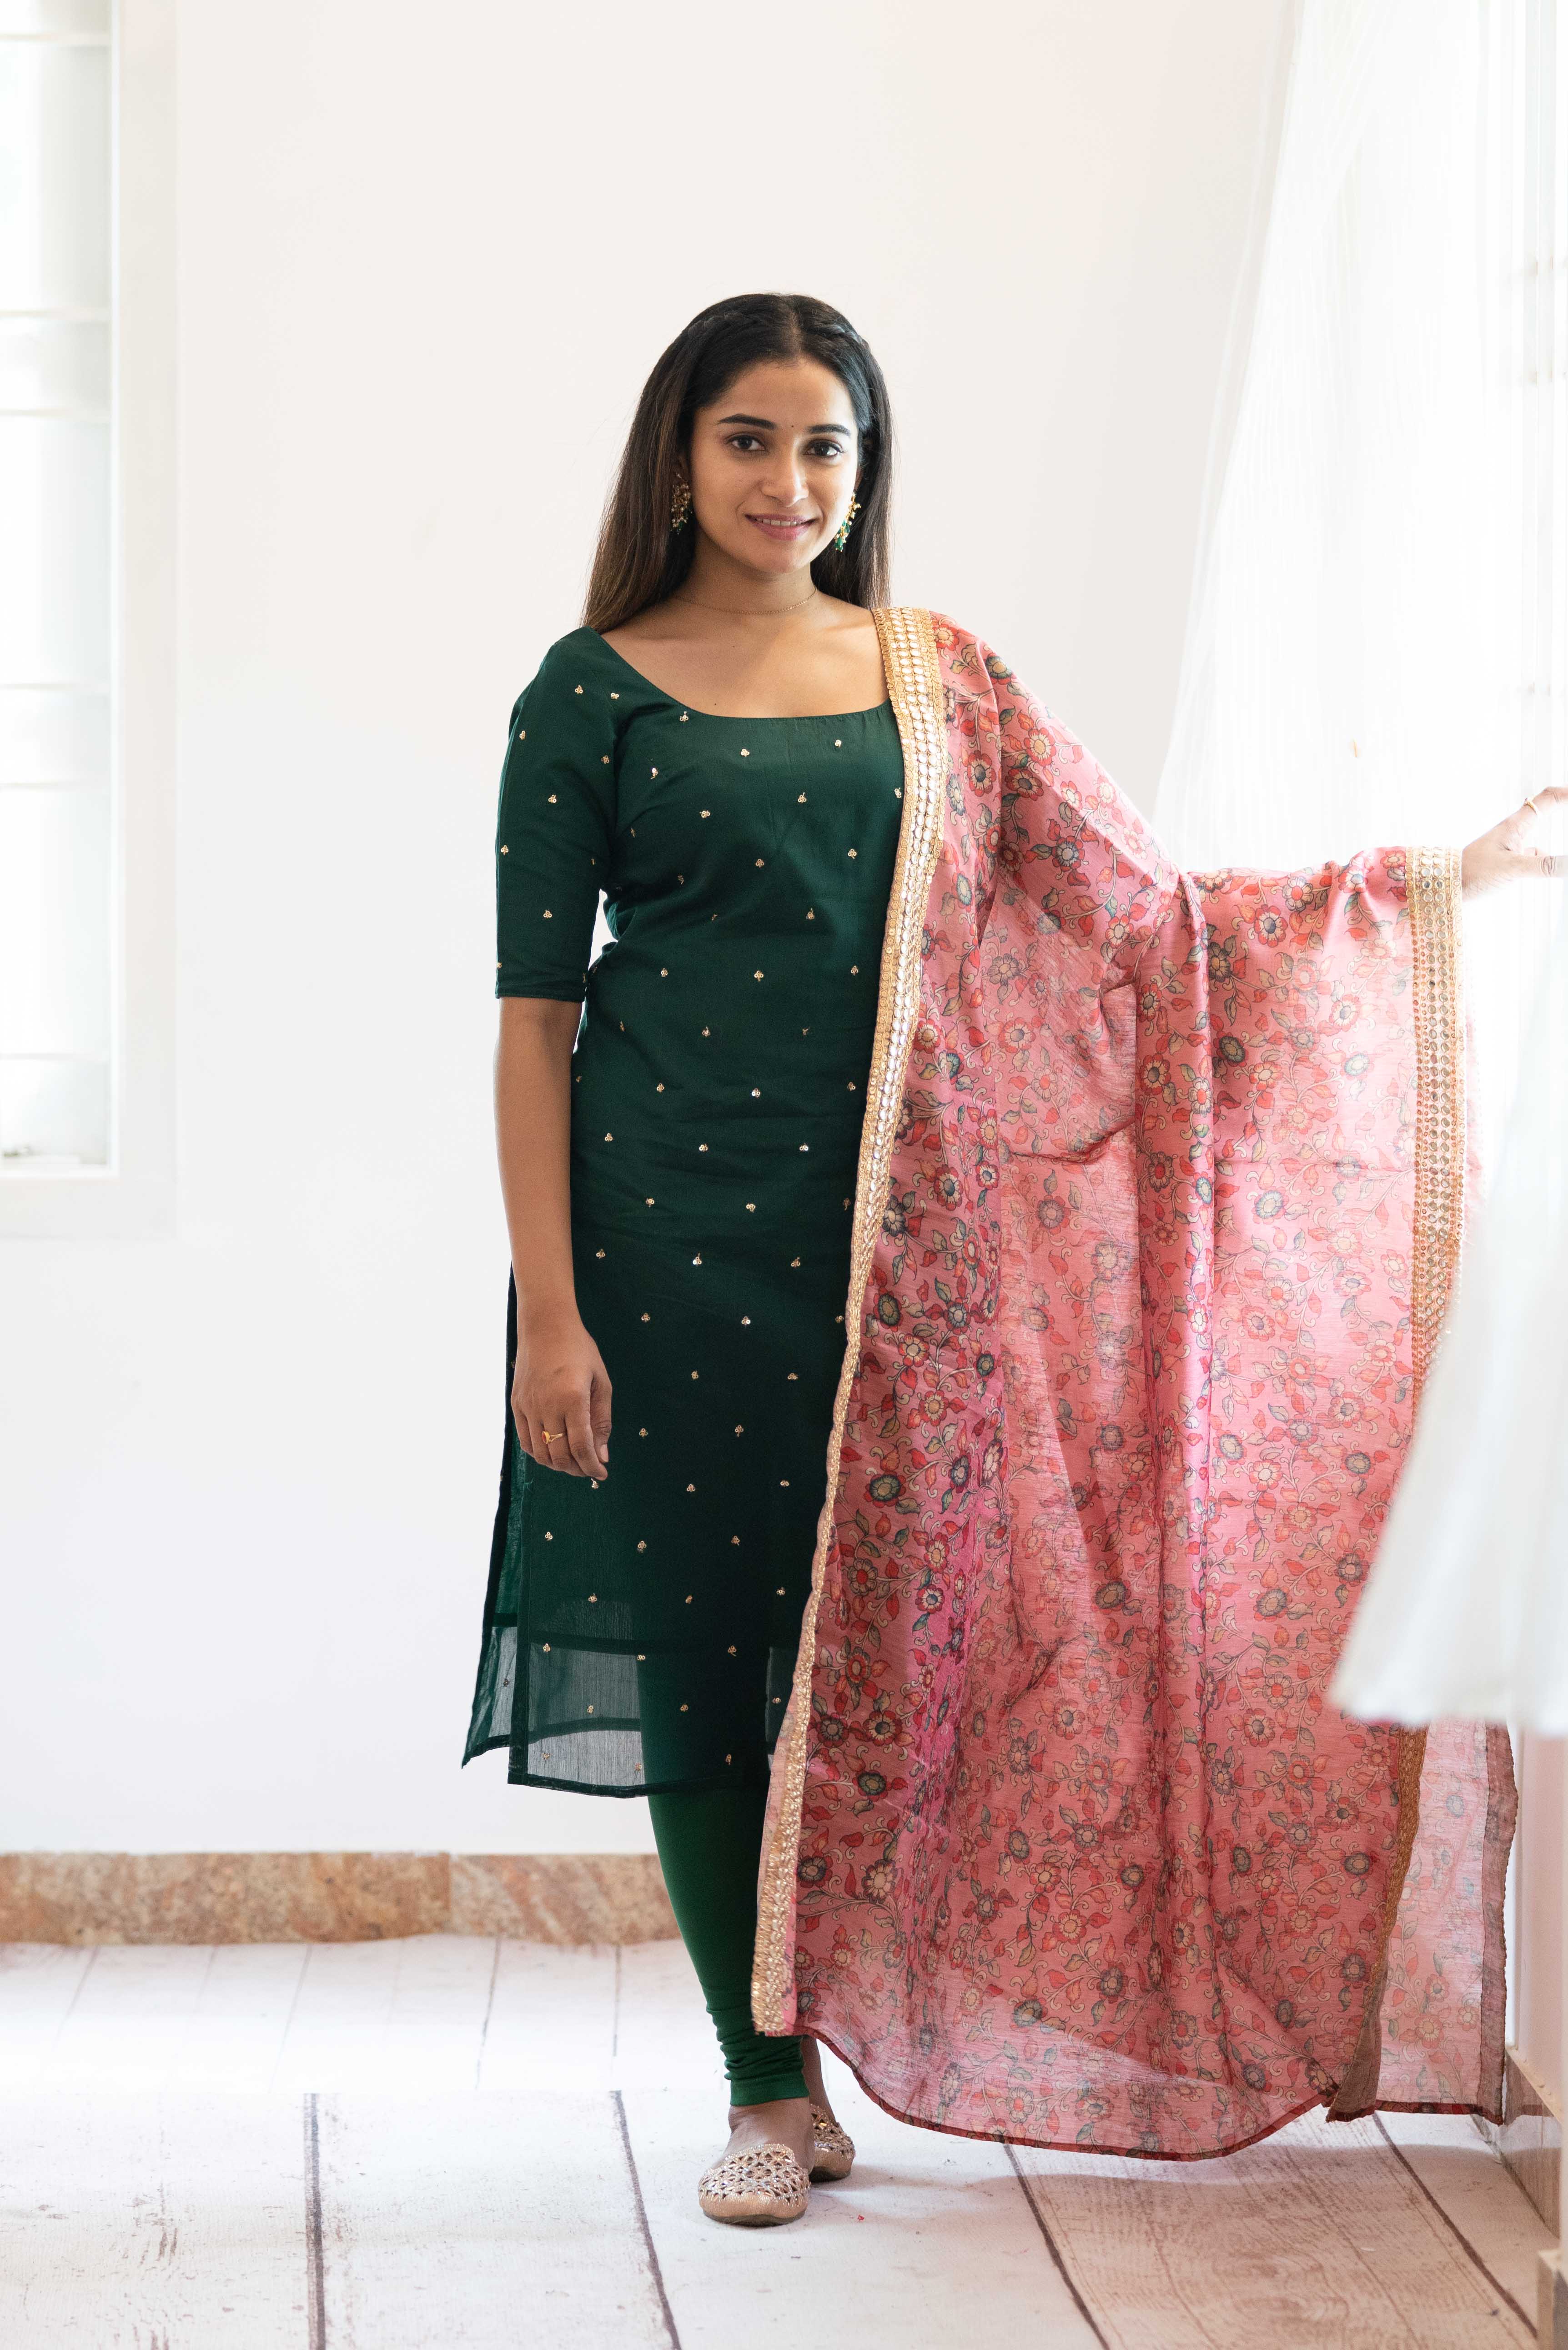 IMD - Chaaya Green Top with Pink Kalamkari printed dupatta